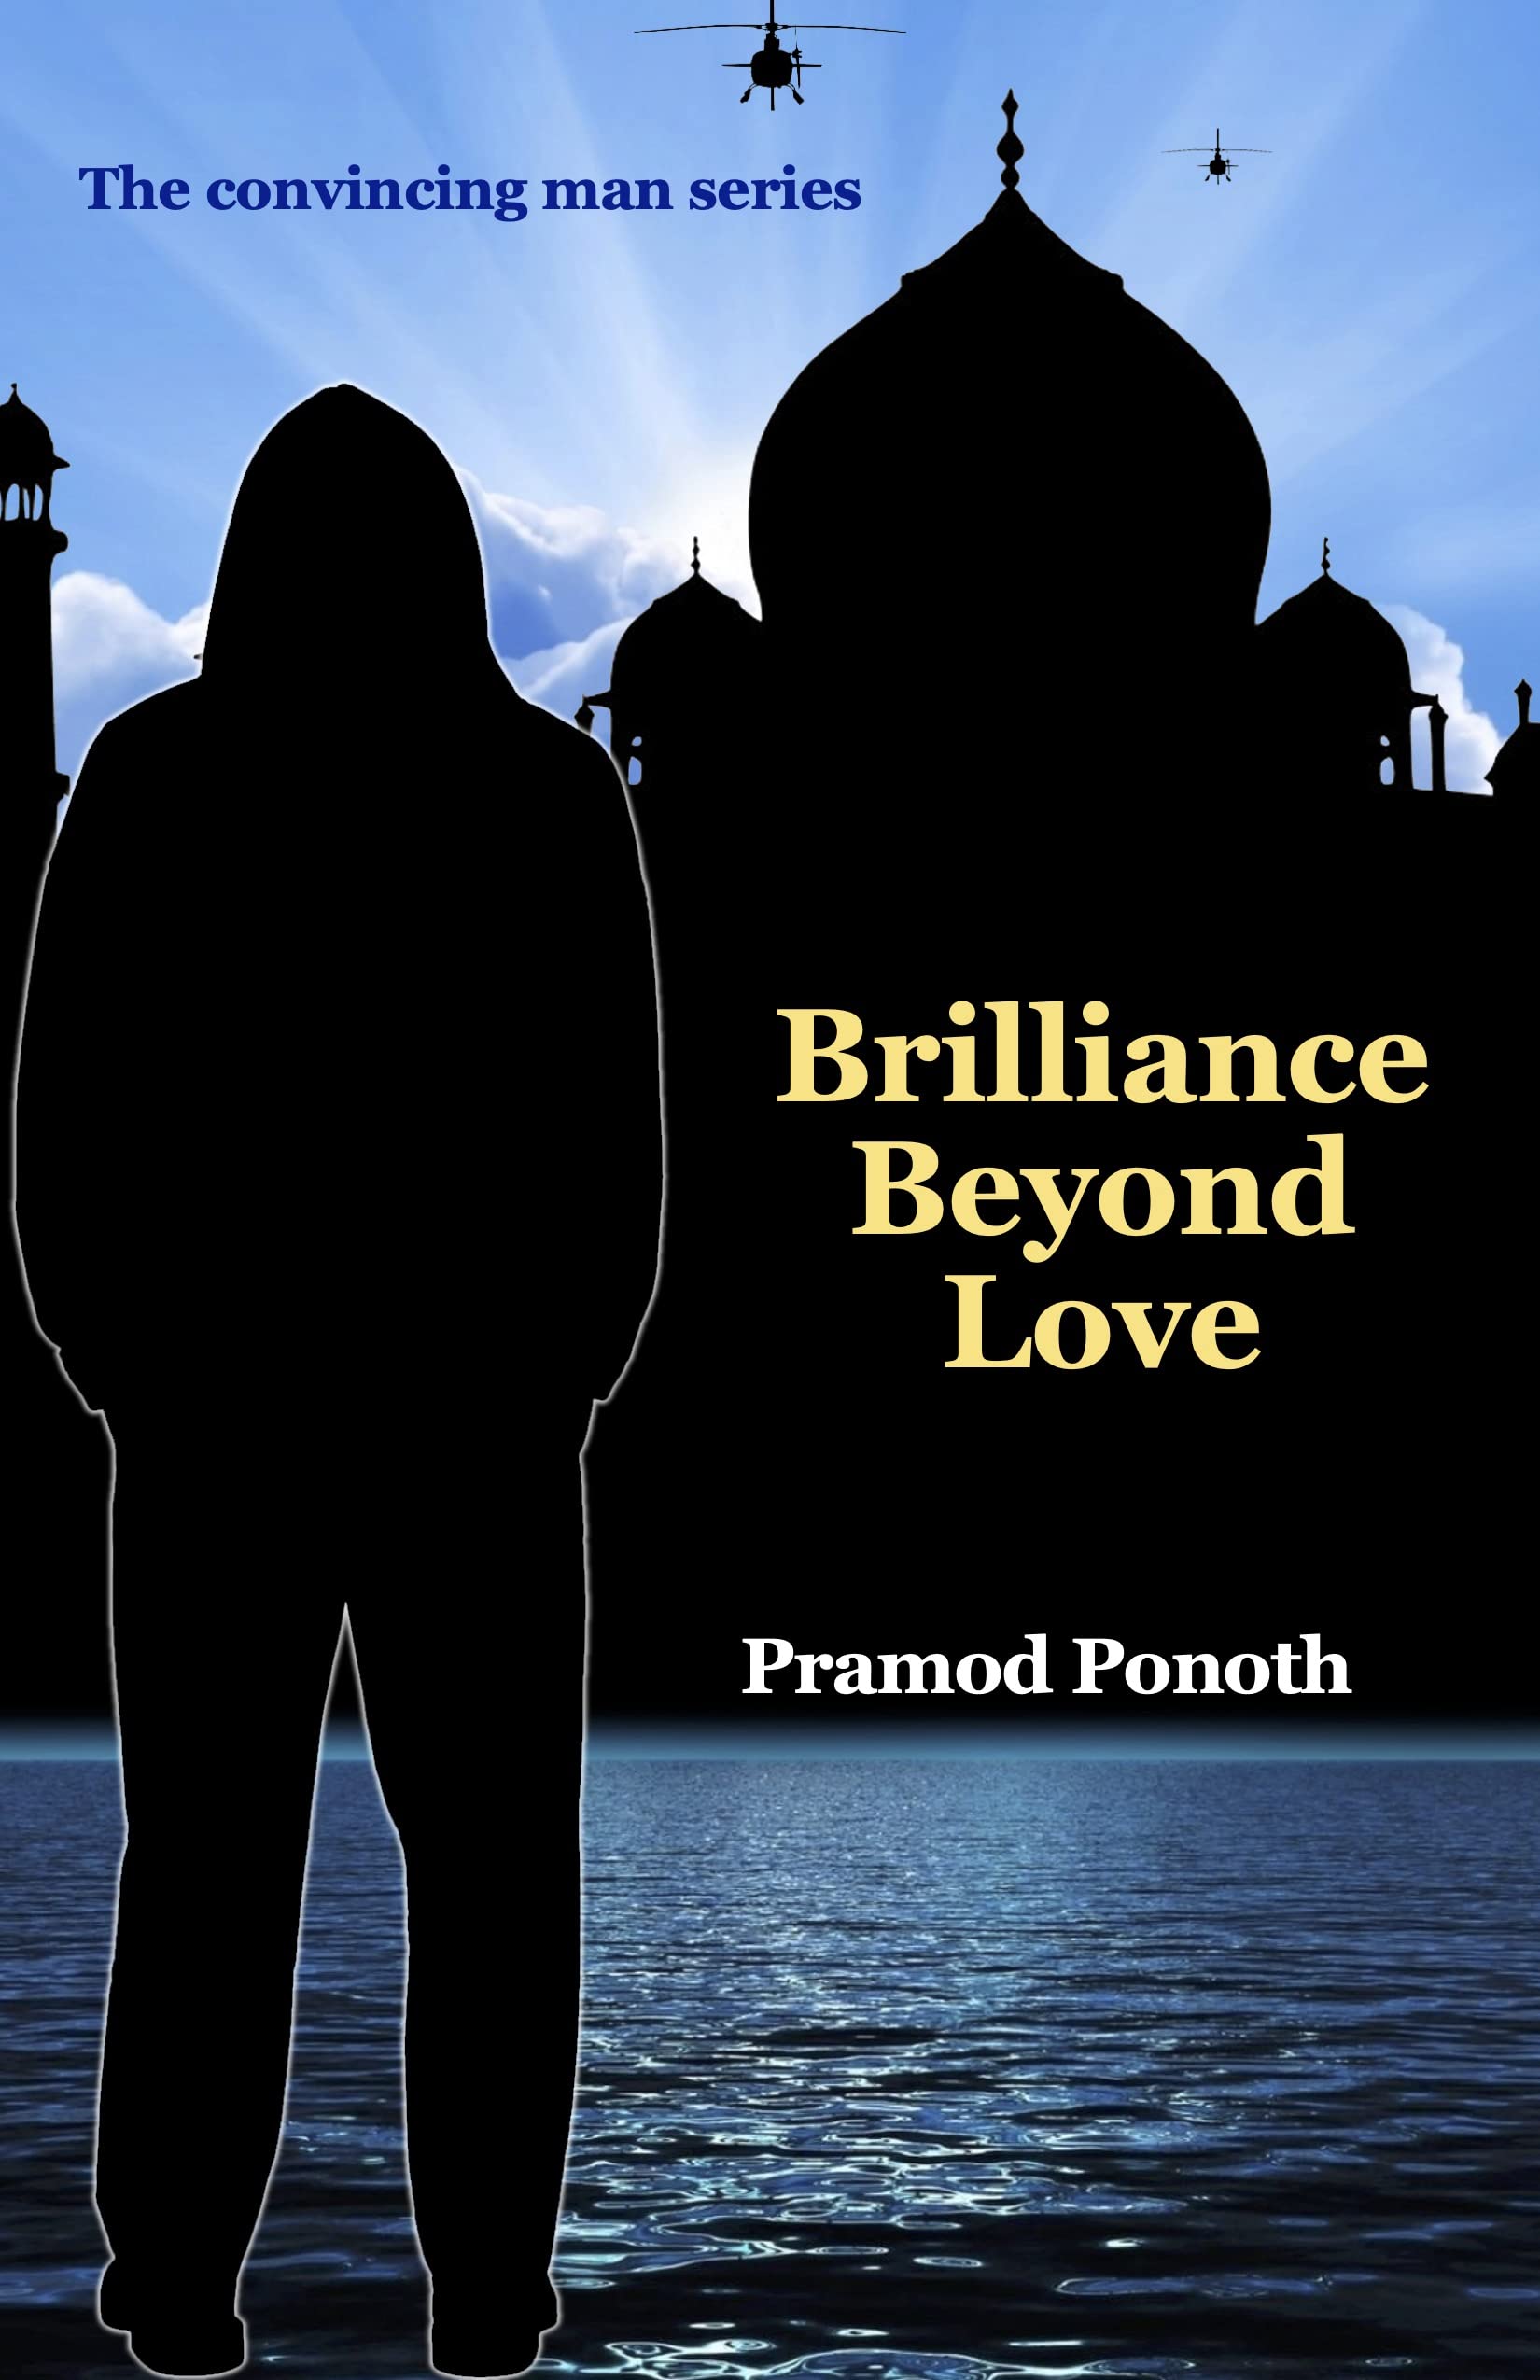 Brilliance Beyond Love by Pramod Ponoth